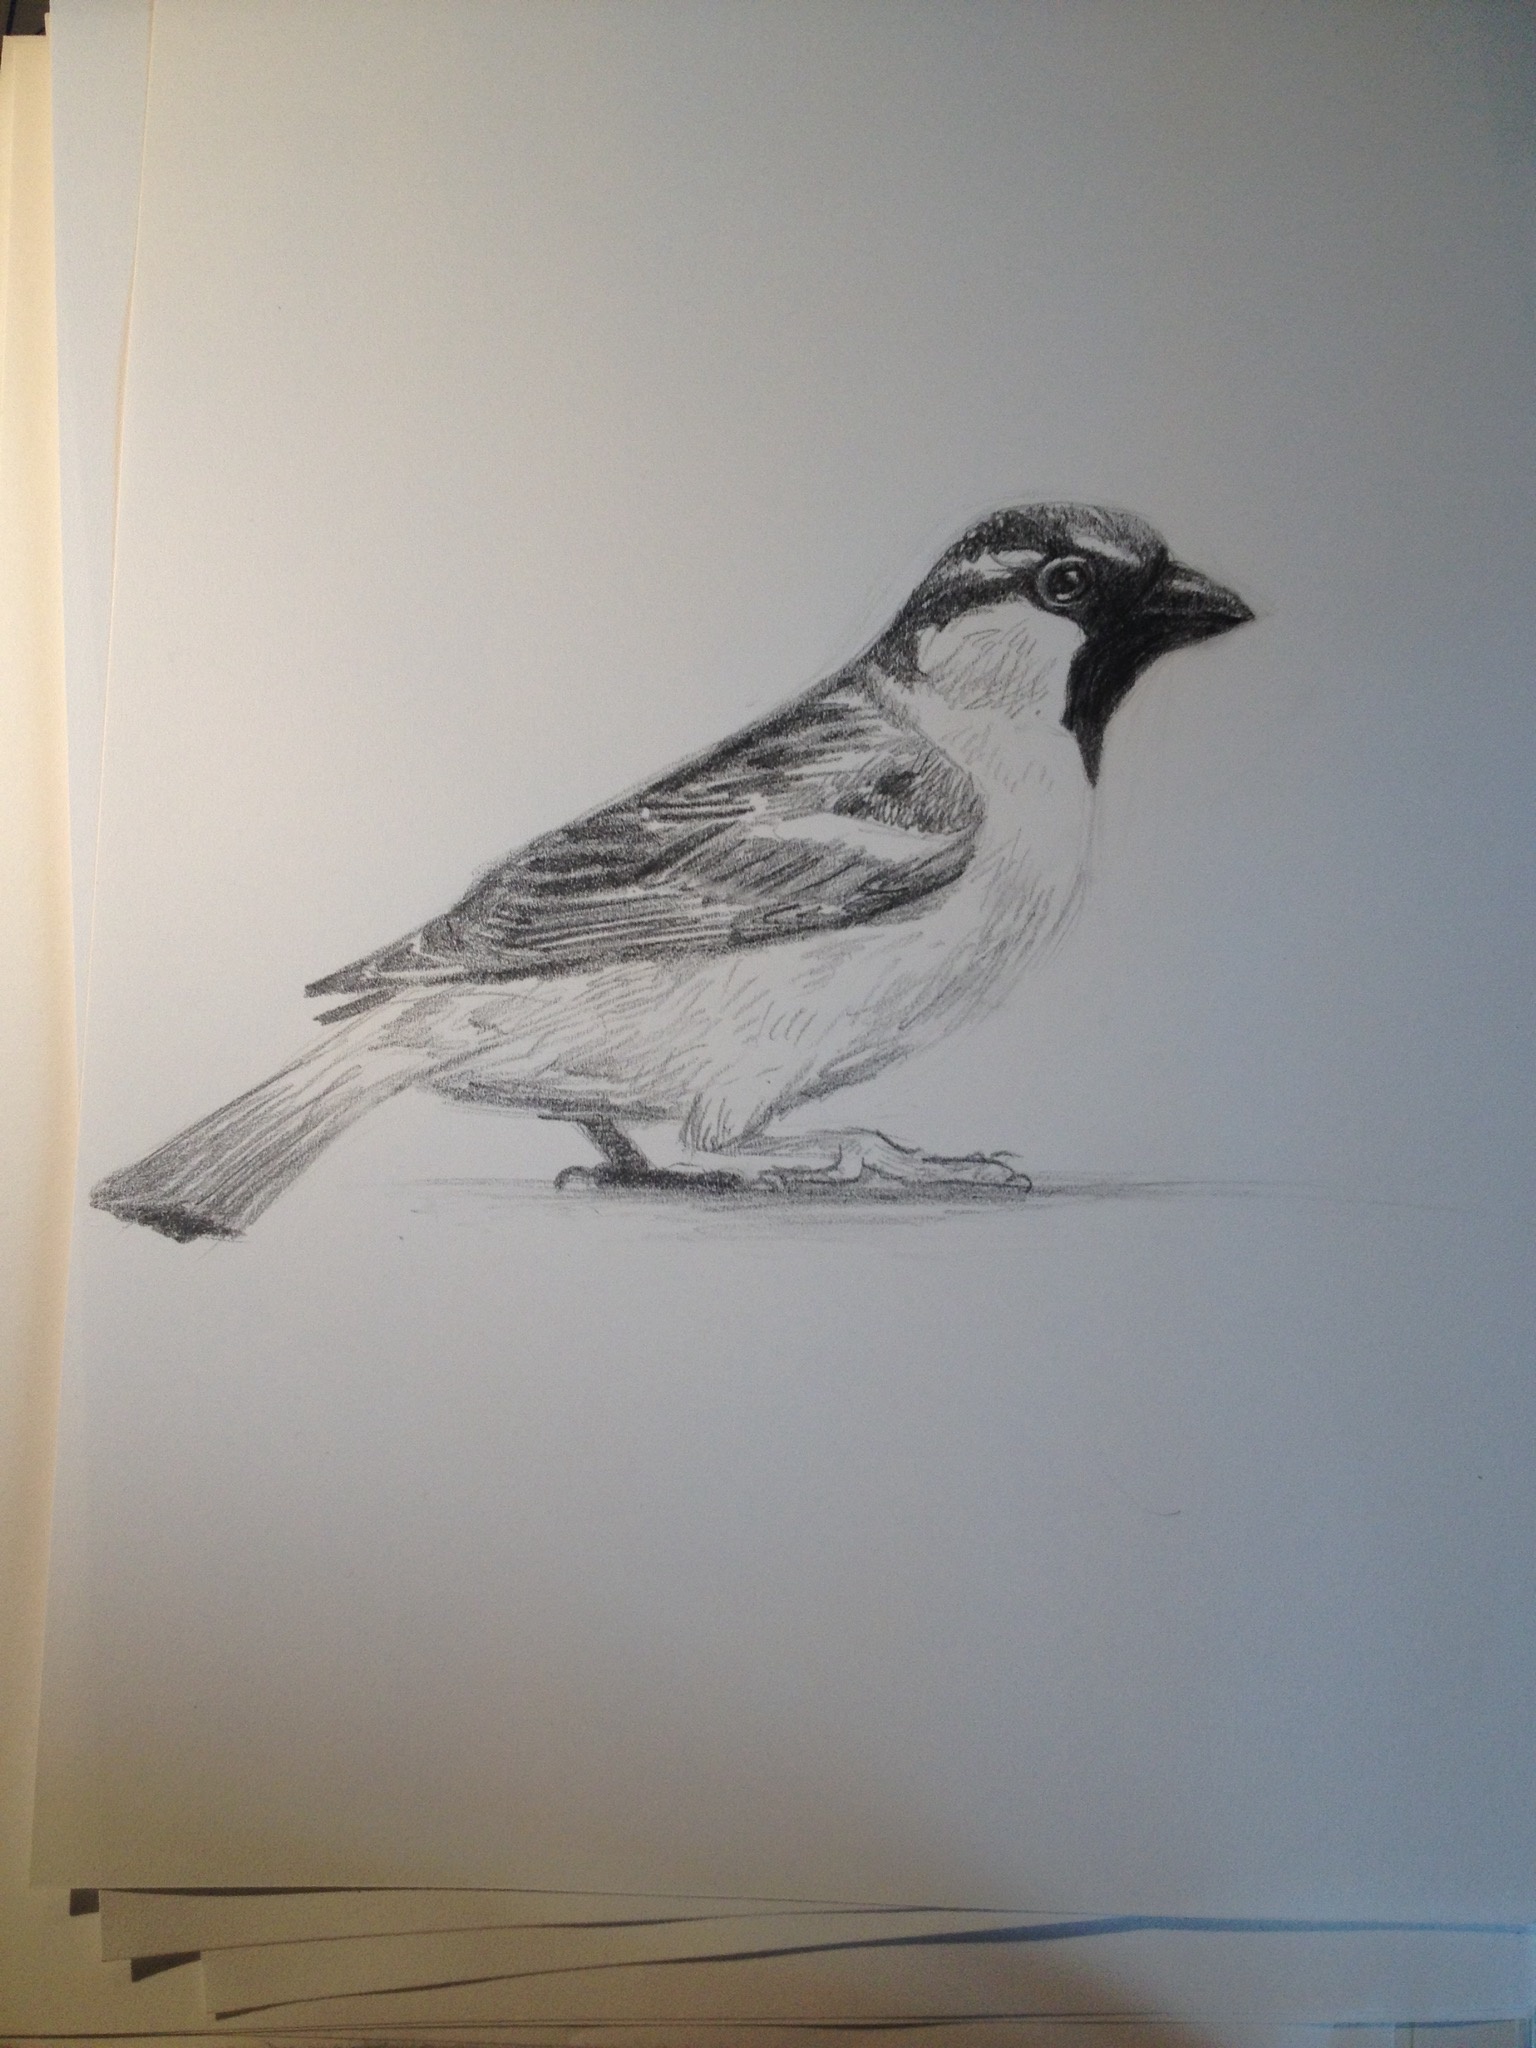 How to draw a bird | Bird | Bird pencil work | Photography | Small bird |  Pencil Shading | Sketching - YouTube